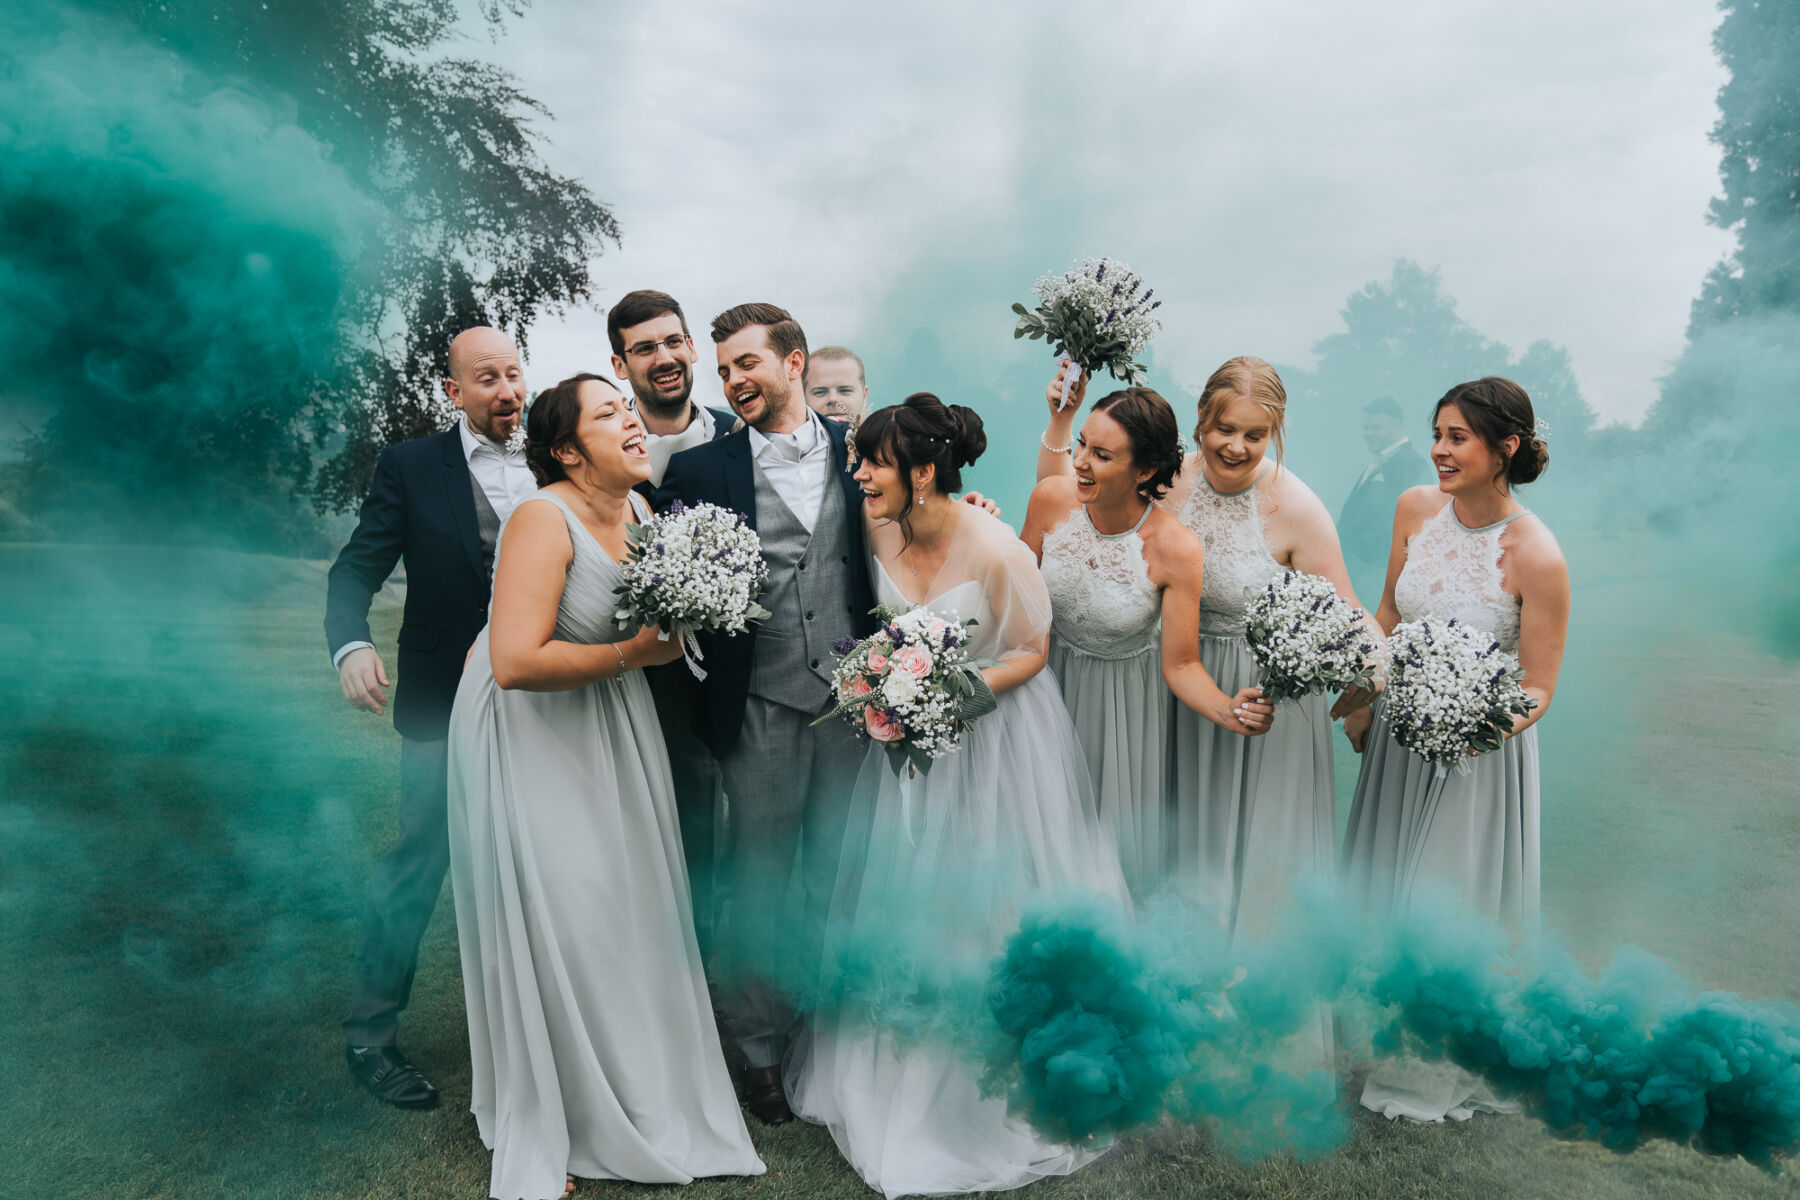 How about Smoke Grenades?  Creative Wedding Photographer Bristol